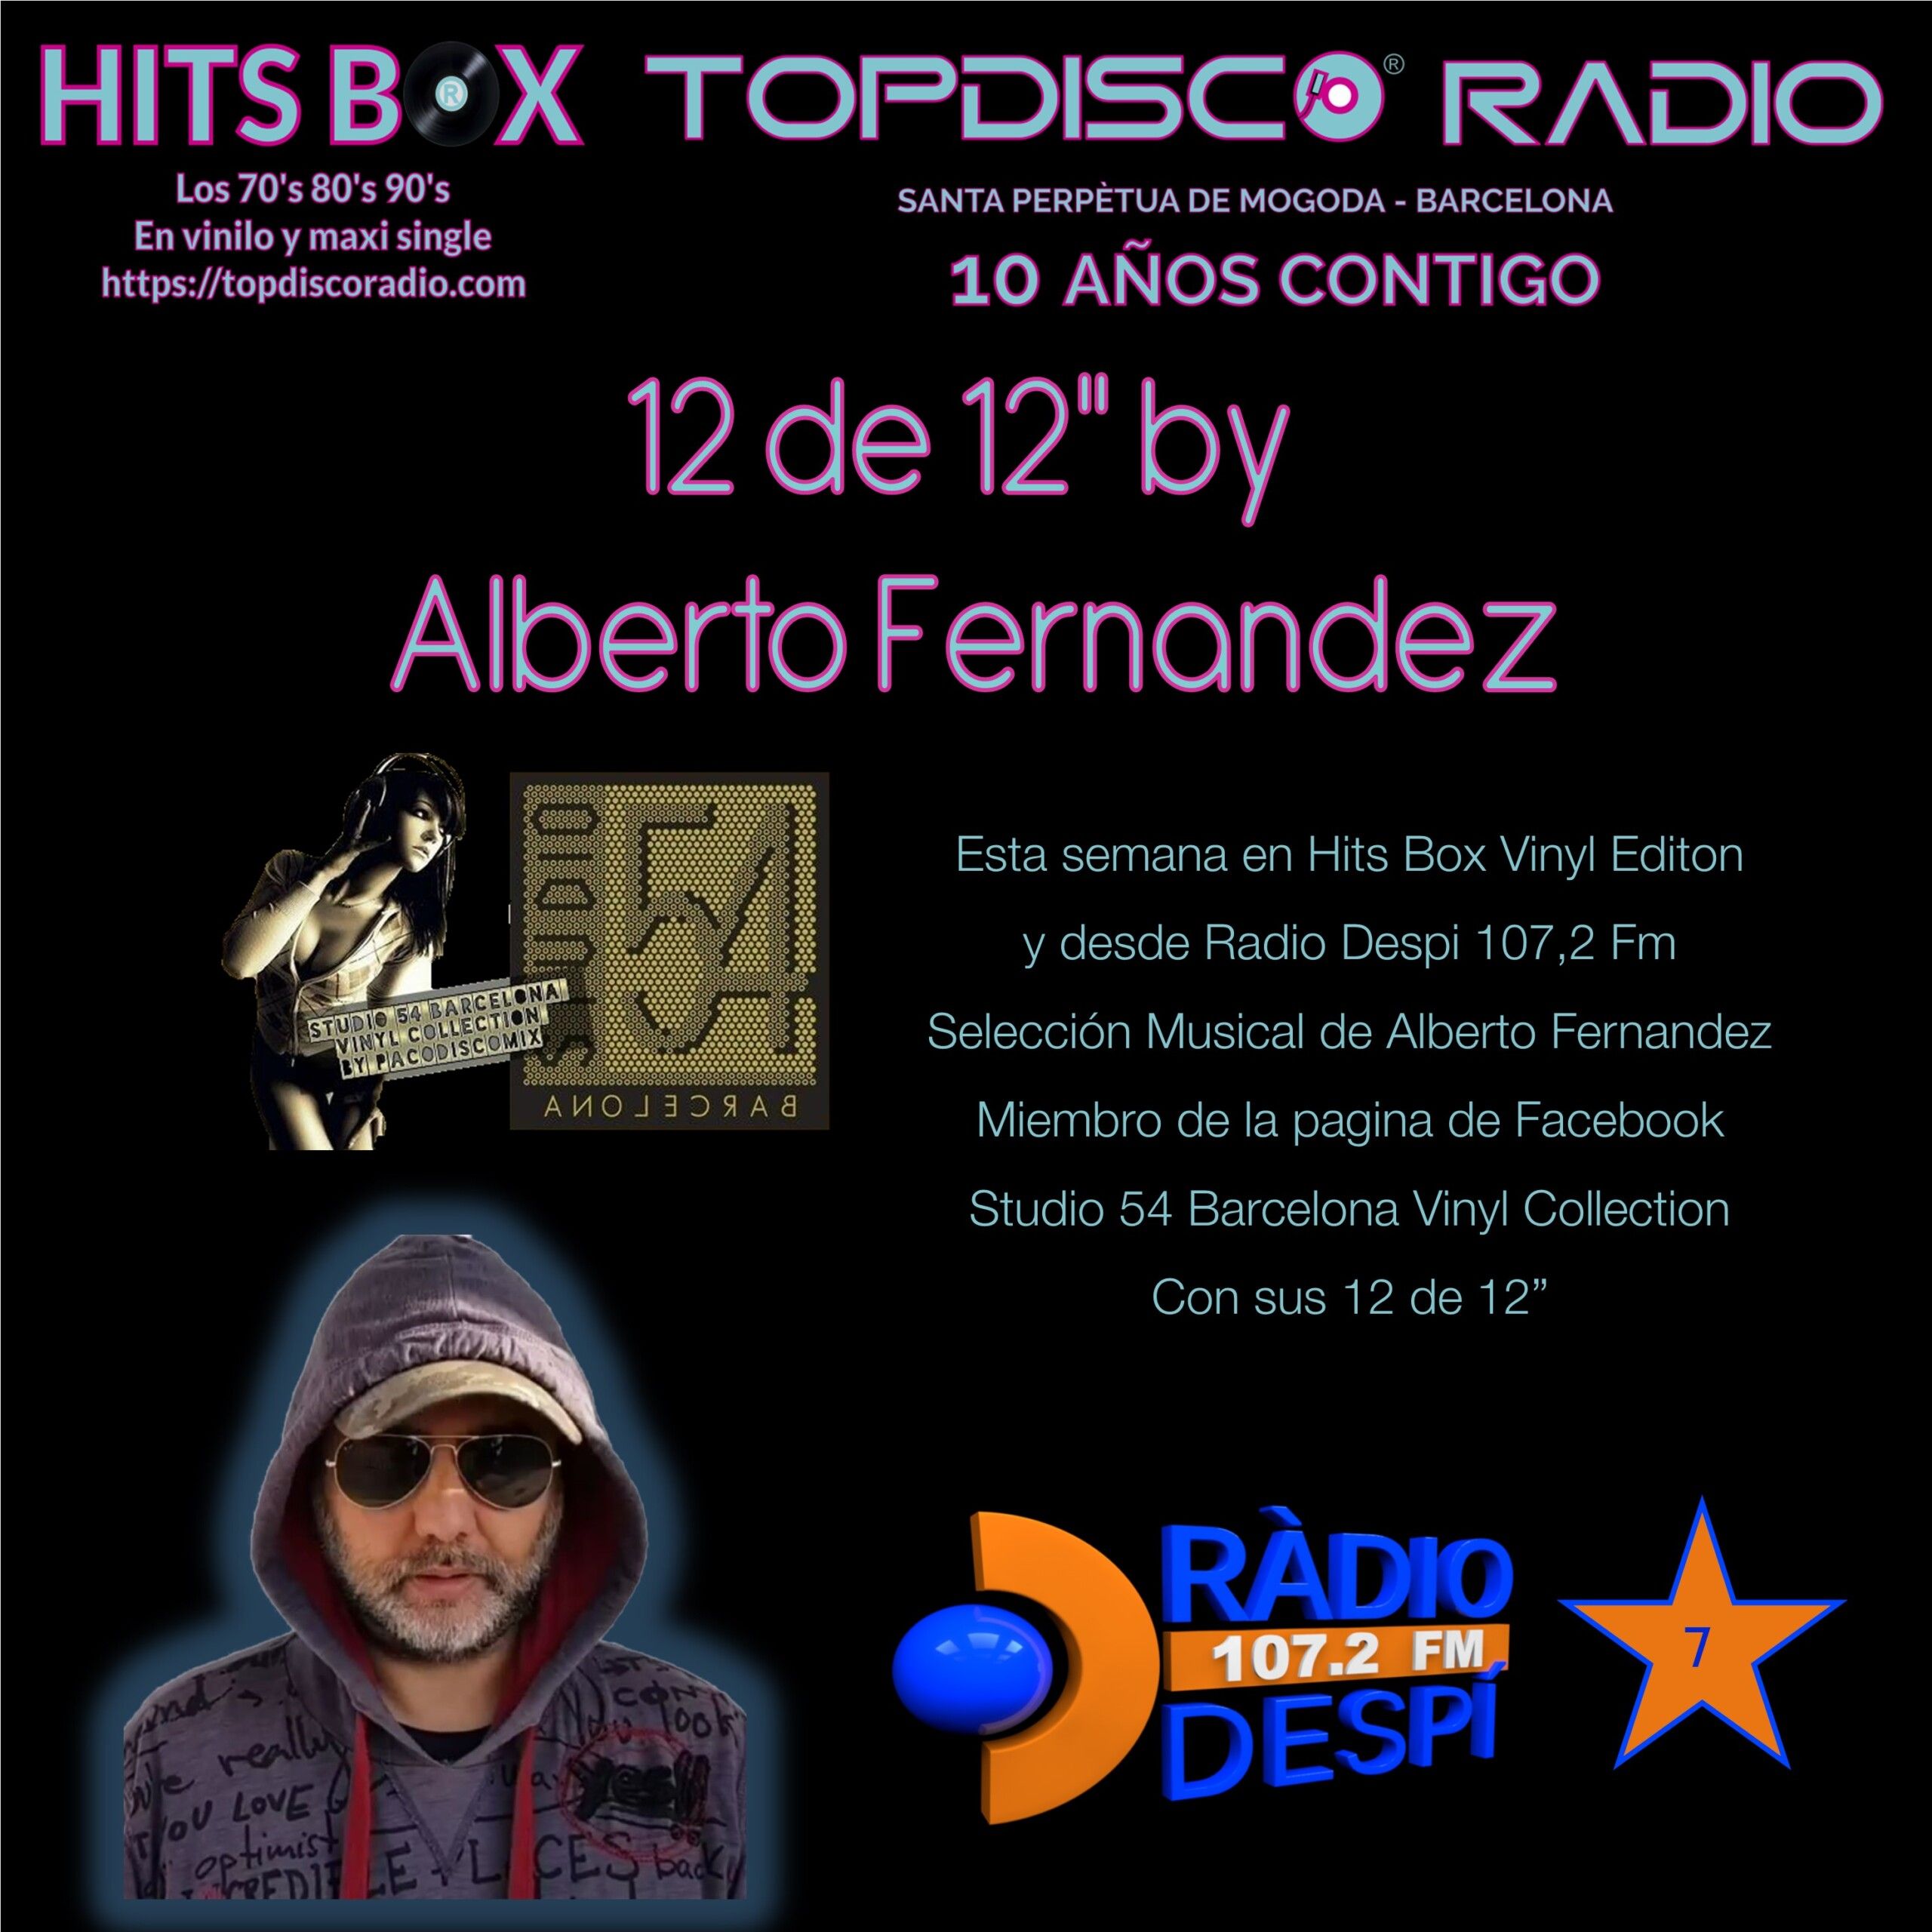 12 de 12 Alberto Fernandez Marin - Topdisco Radio - Hits Box - Radio Despi